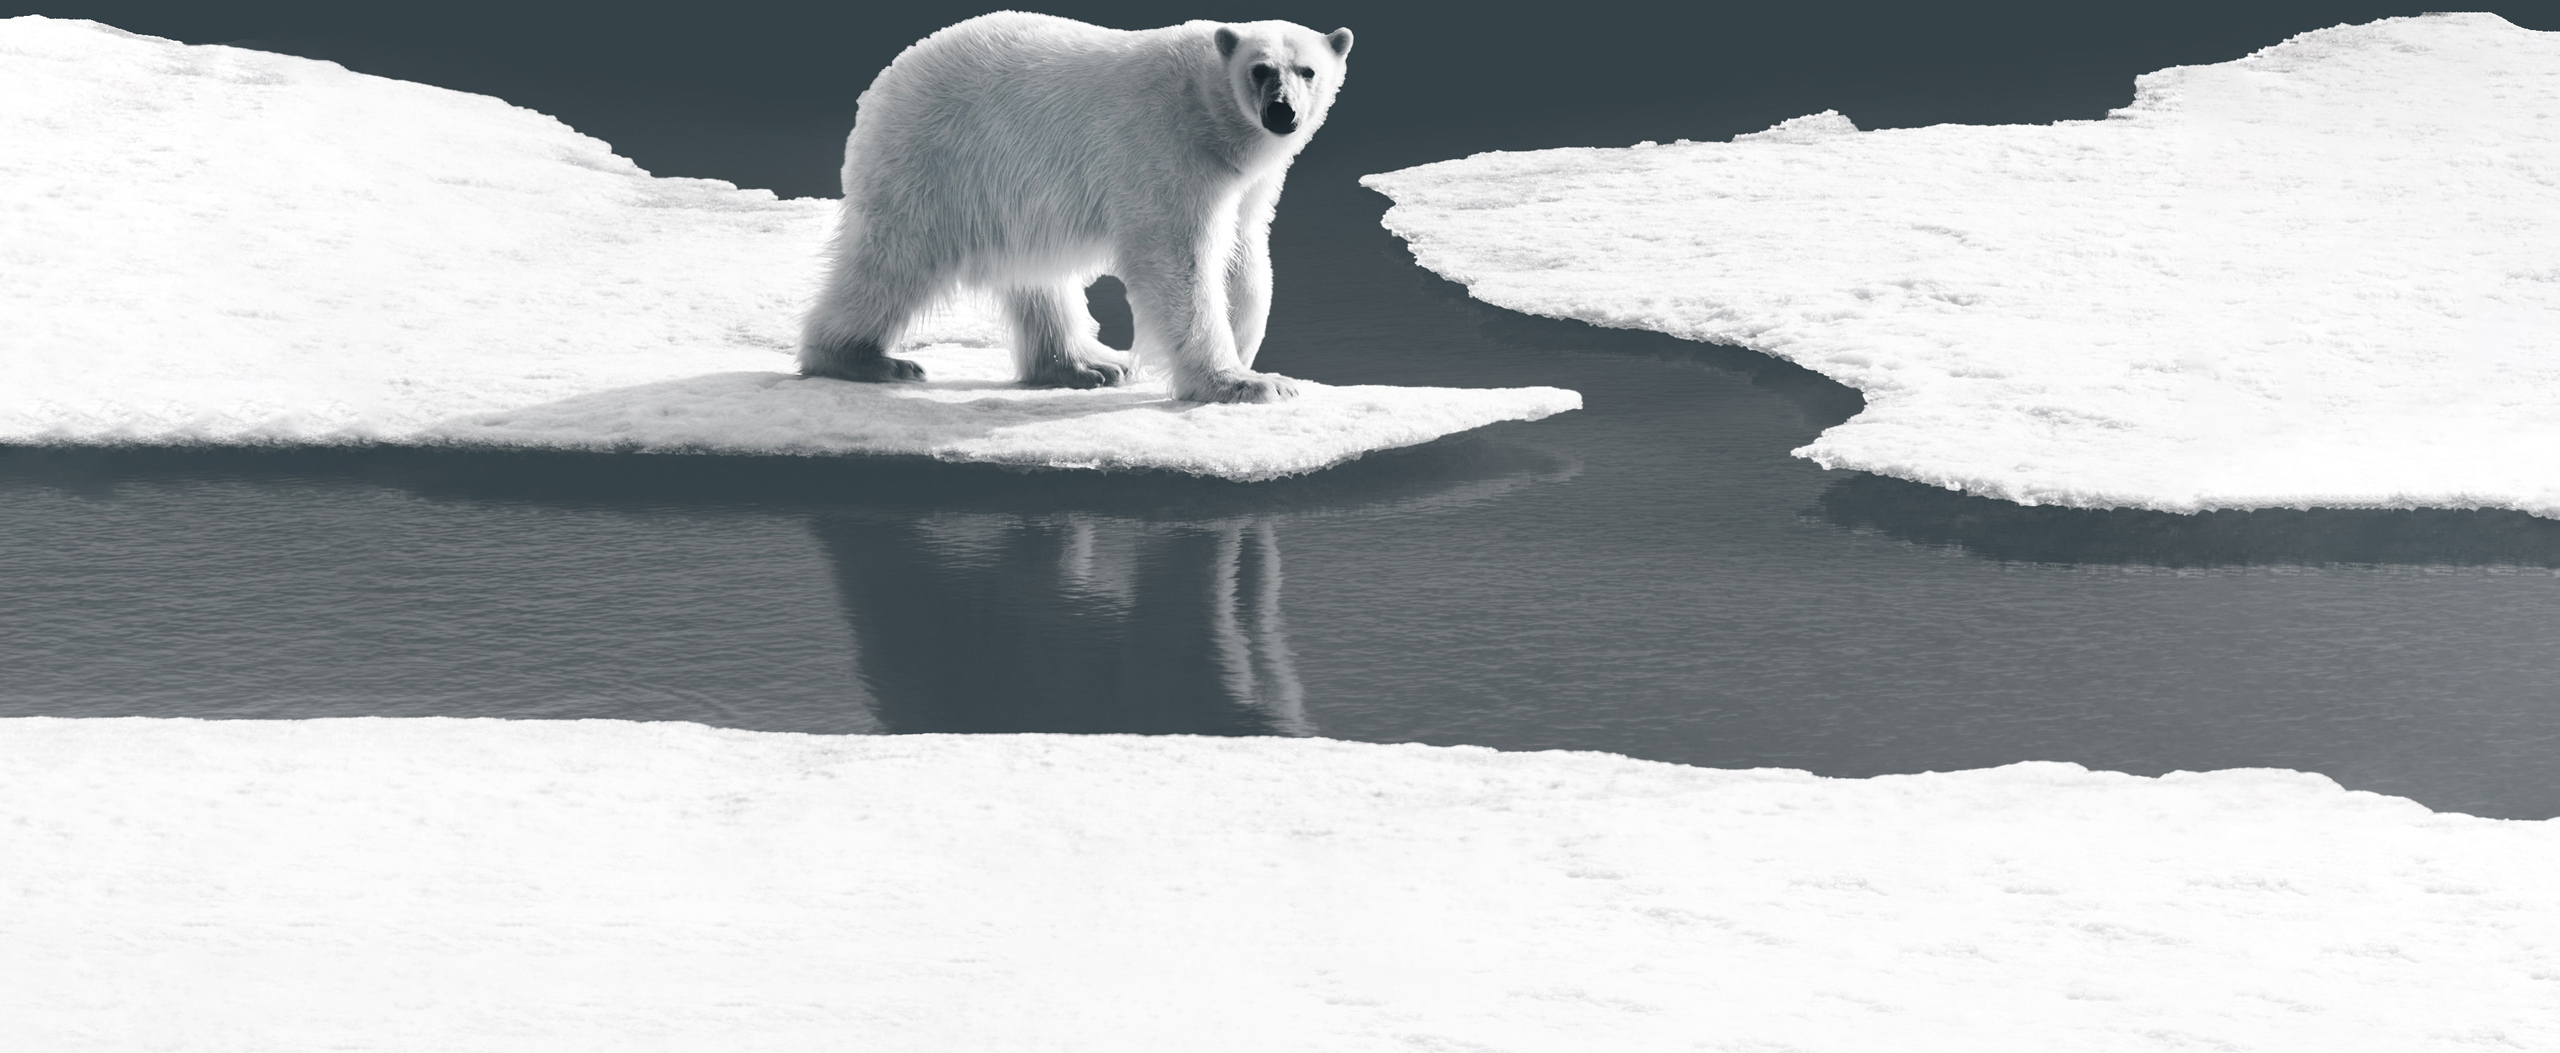 Instat – Institute of applied statistics: Polar Bear